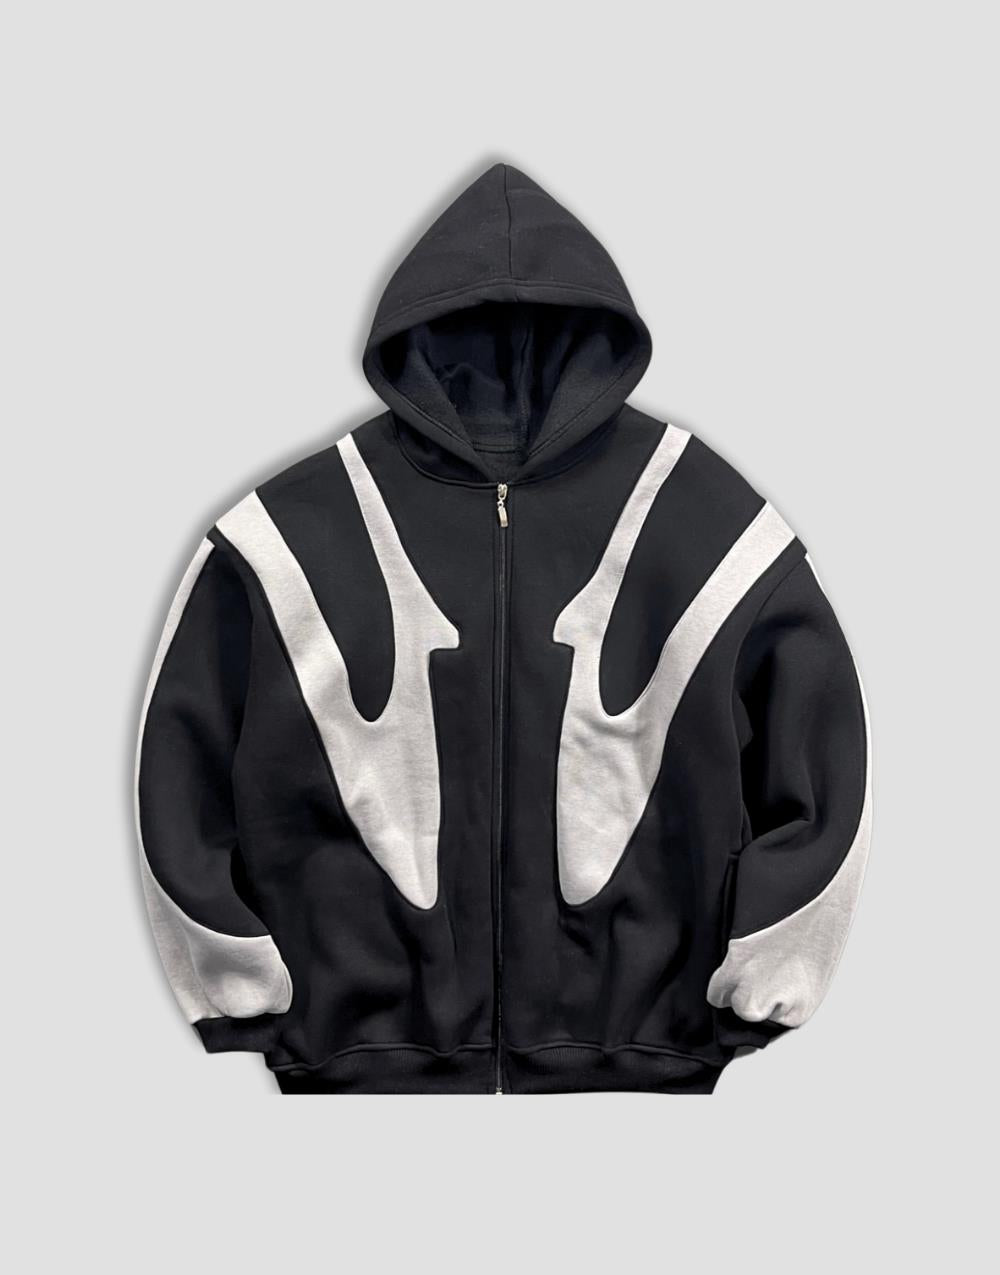 Men's Preimum Zip Designer Hoodie Black-Gray Jacket - STREETMODE ™